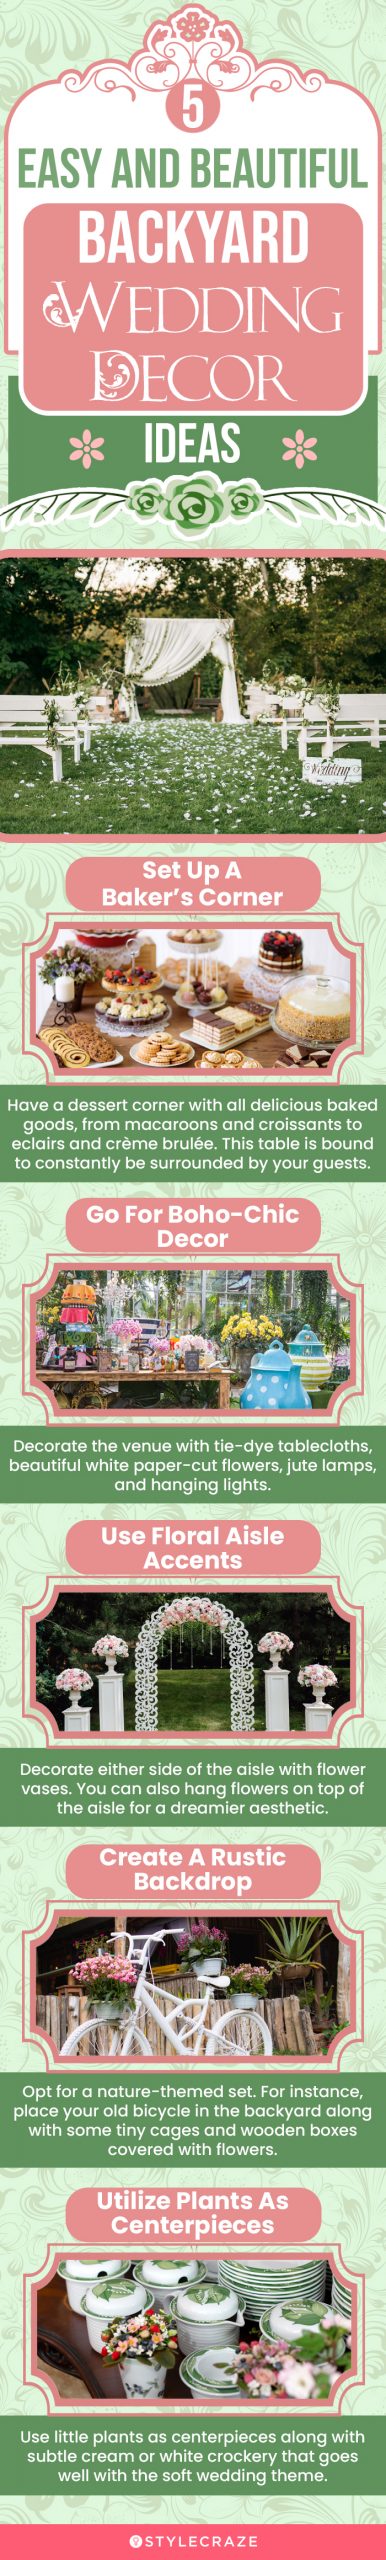 5 easy yet beautiful backyard wedding decor ideas (infographic)